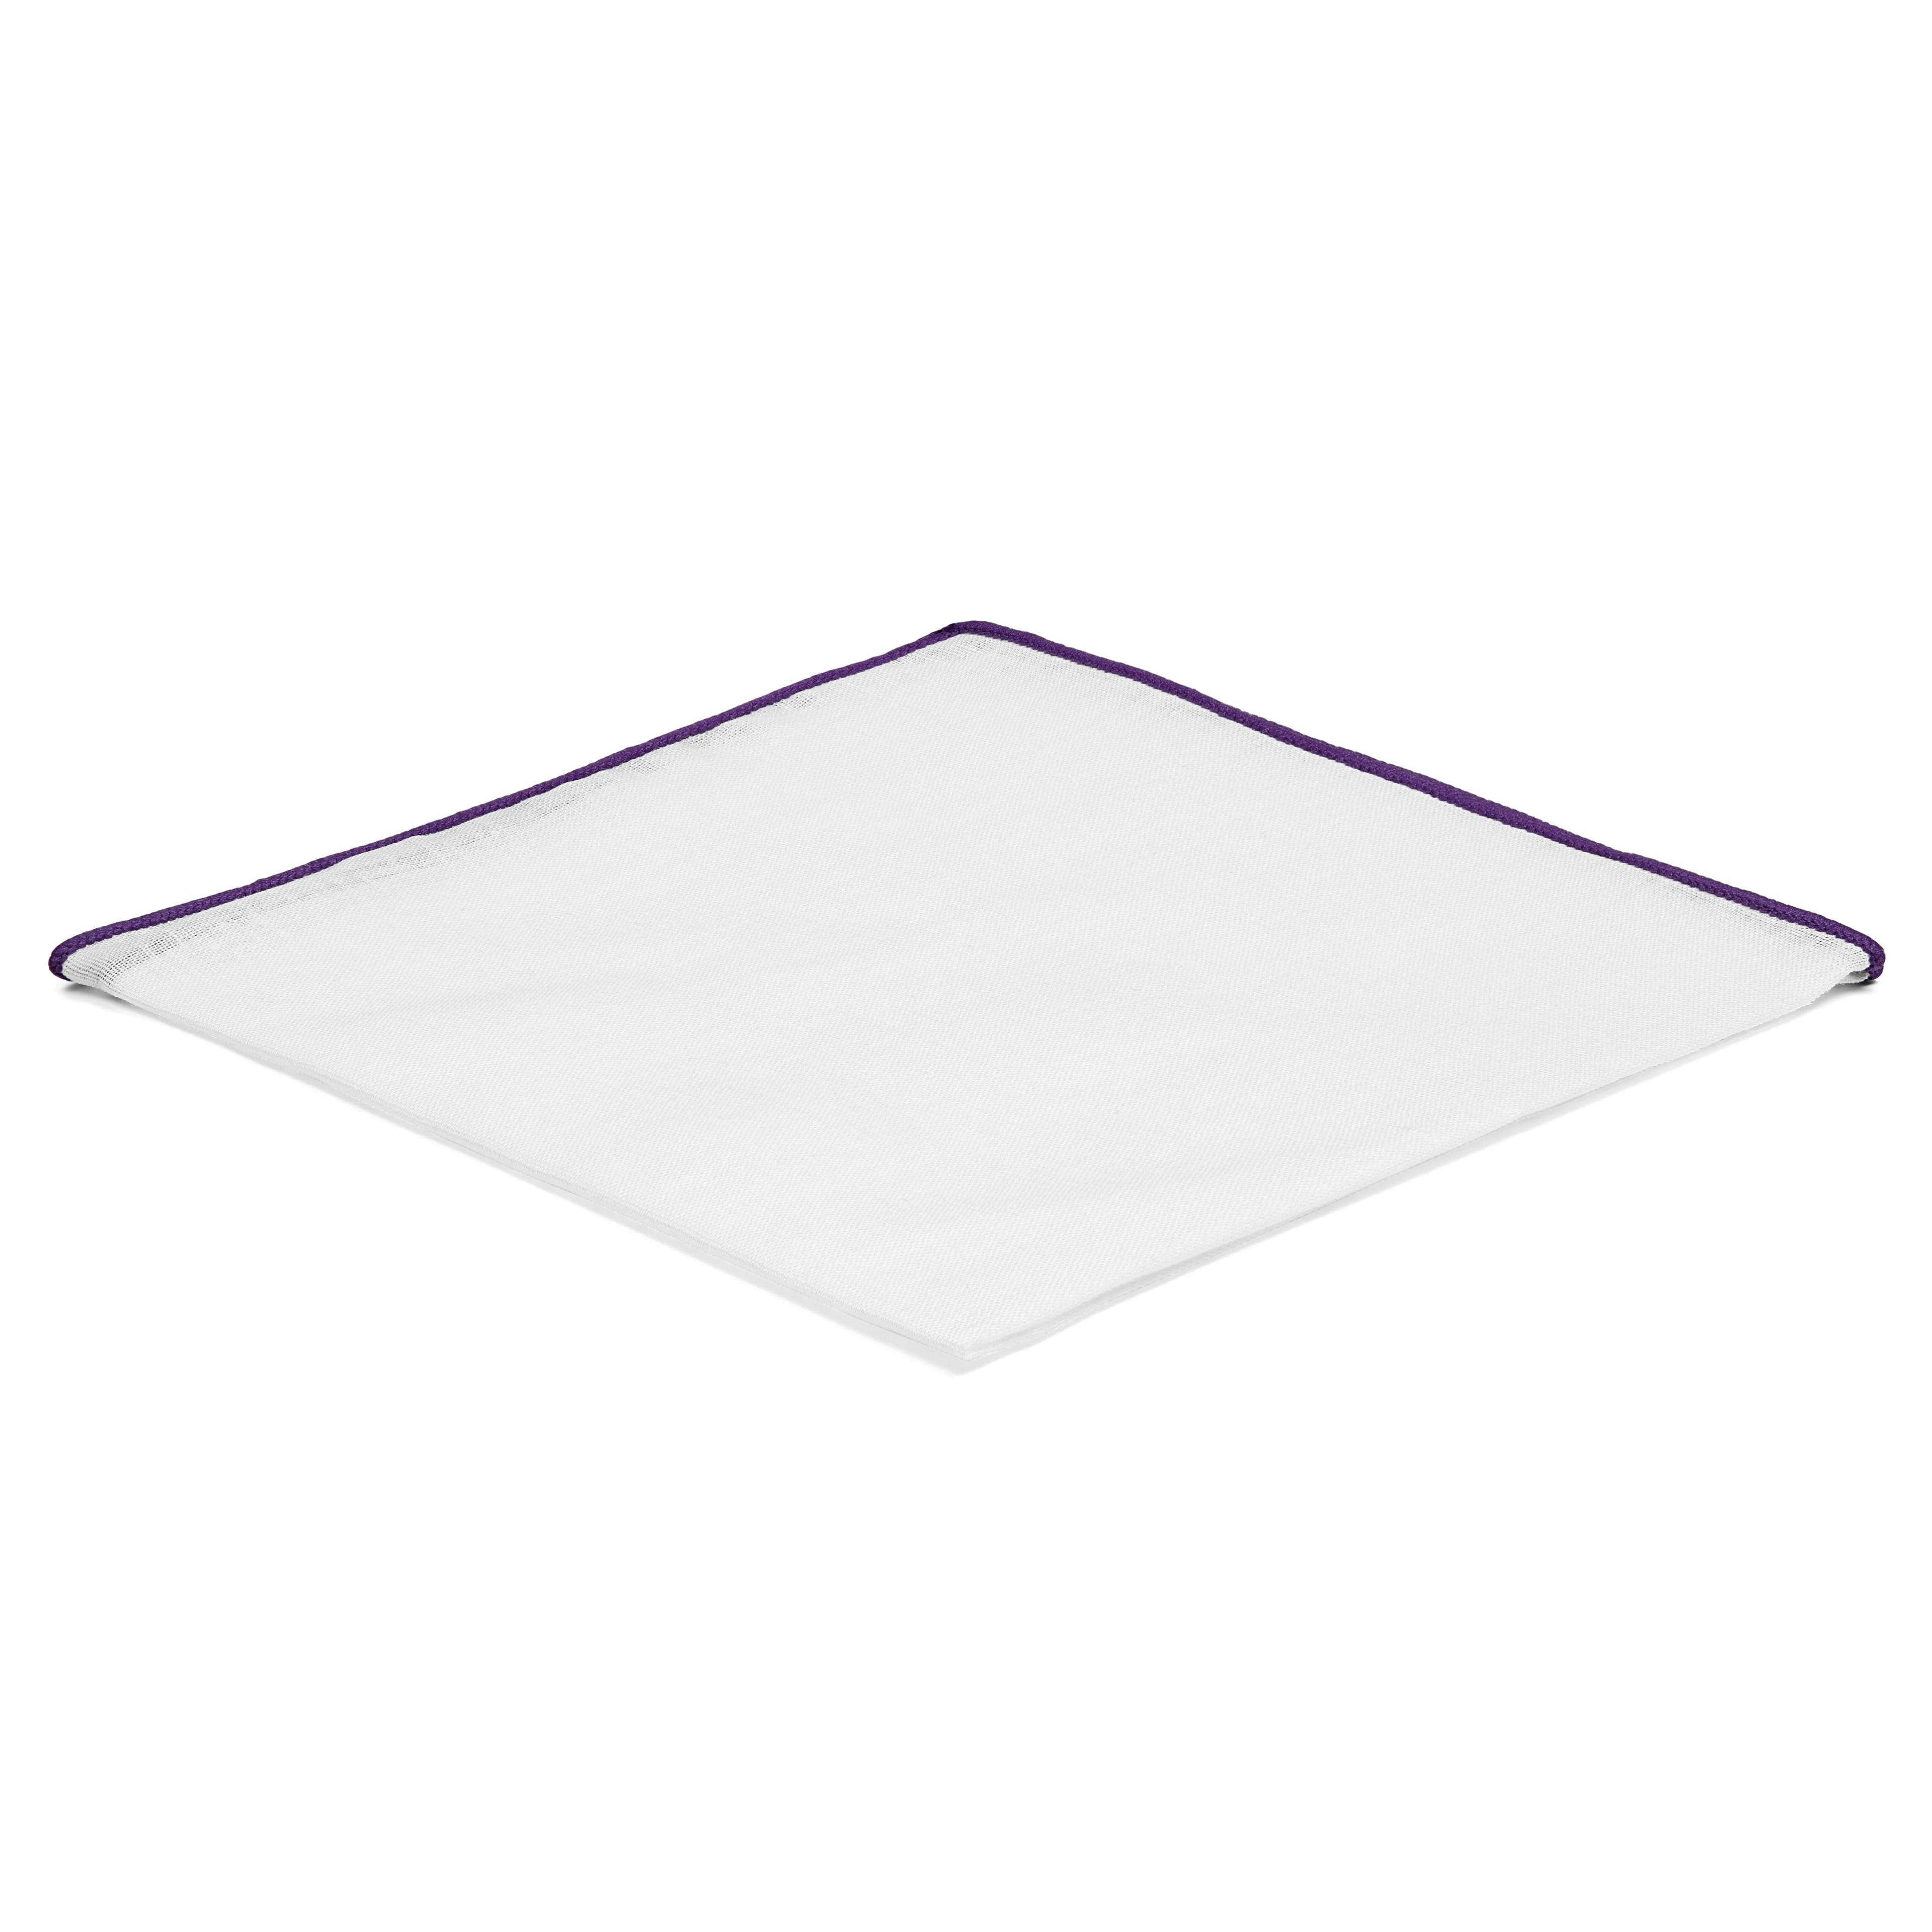 White Pocket Square with Purple Edges